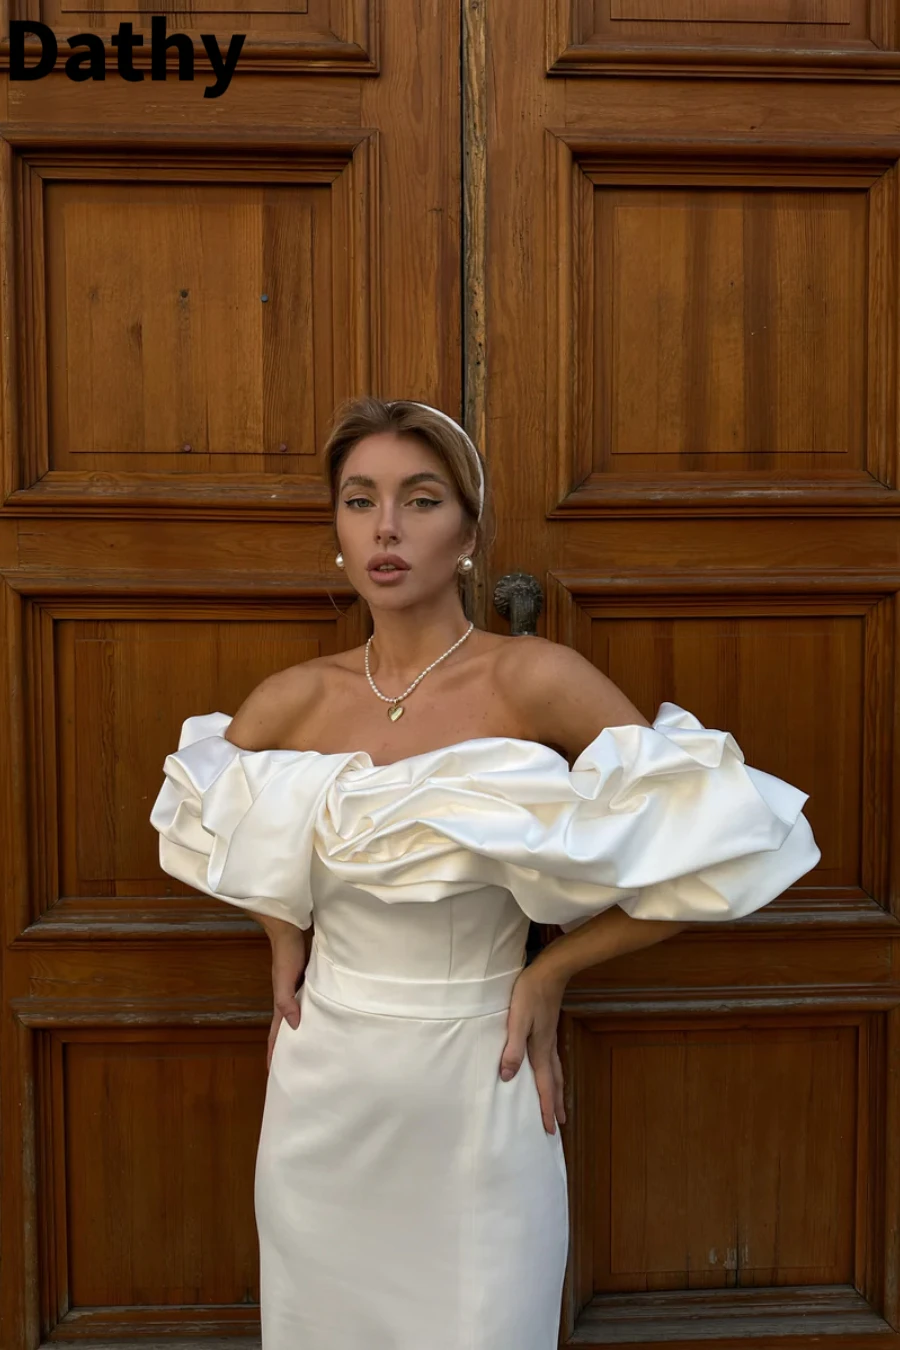 Dathy White Elegant Ruffle Wedding Dress Card Shoulder Sweeping Train Bride Robe Wedding Dresses For Woman